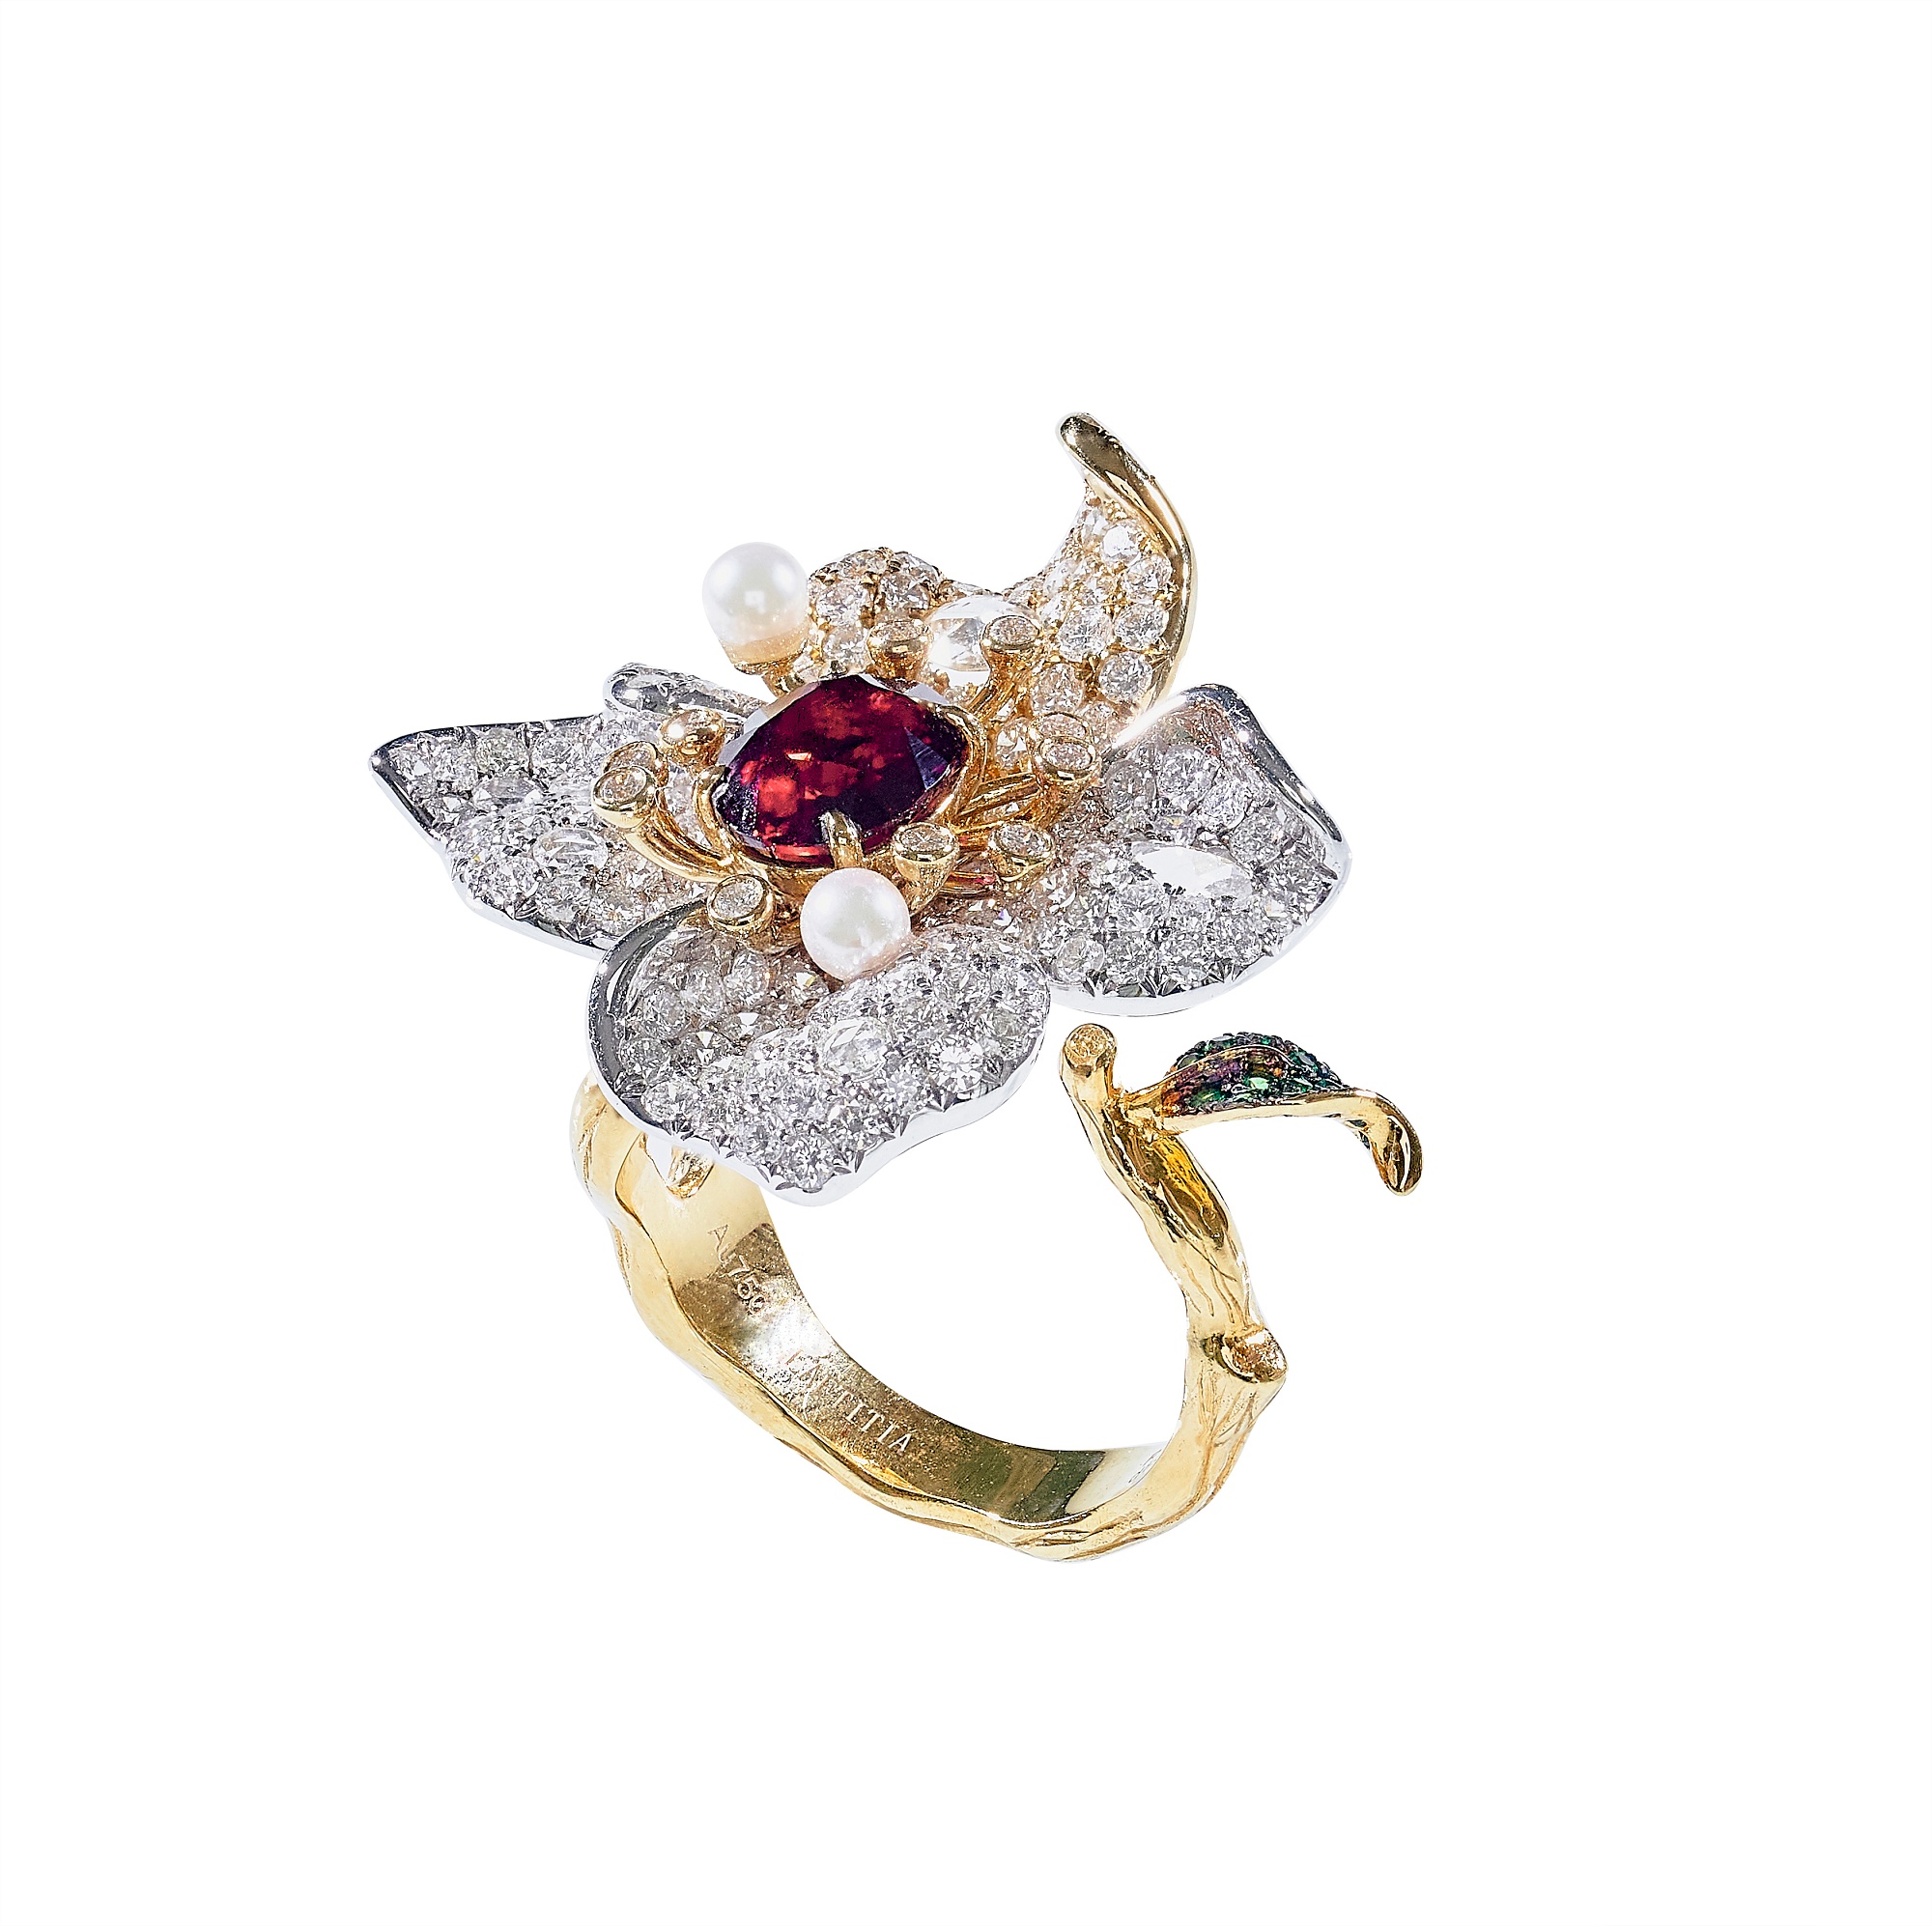 Ring collection Oriental Garden, LAETITIA, Ruby, Diamonds, Garnets, Sapphires, Pearl, 18K Gold | Photo 1